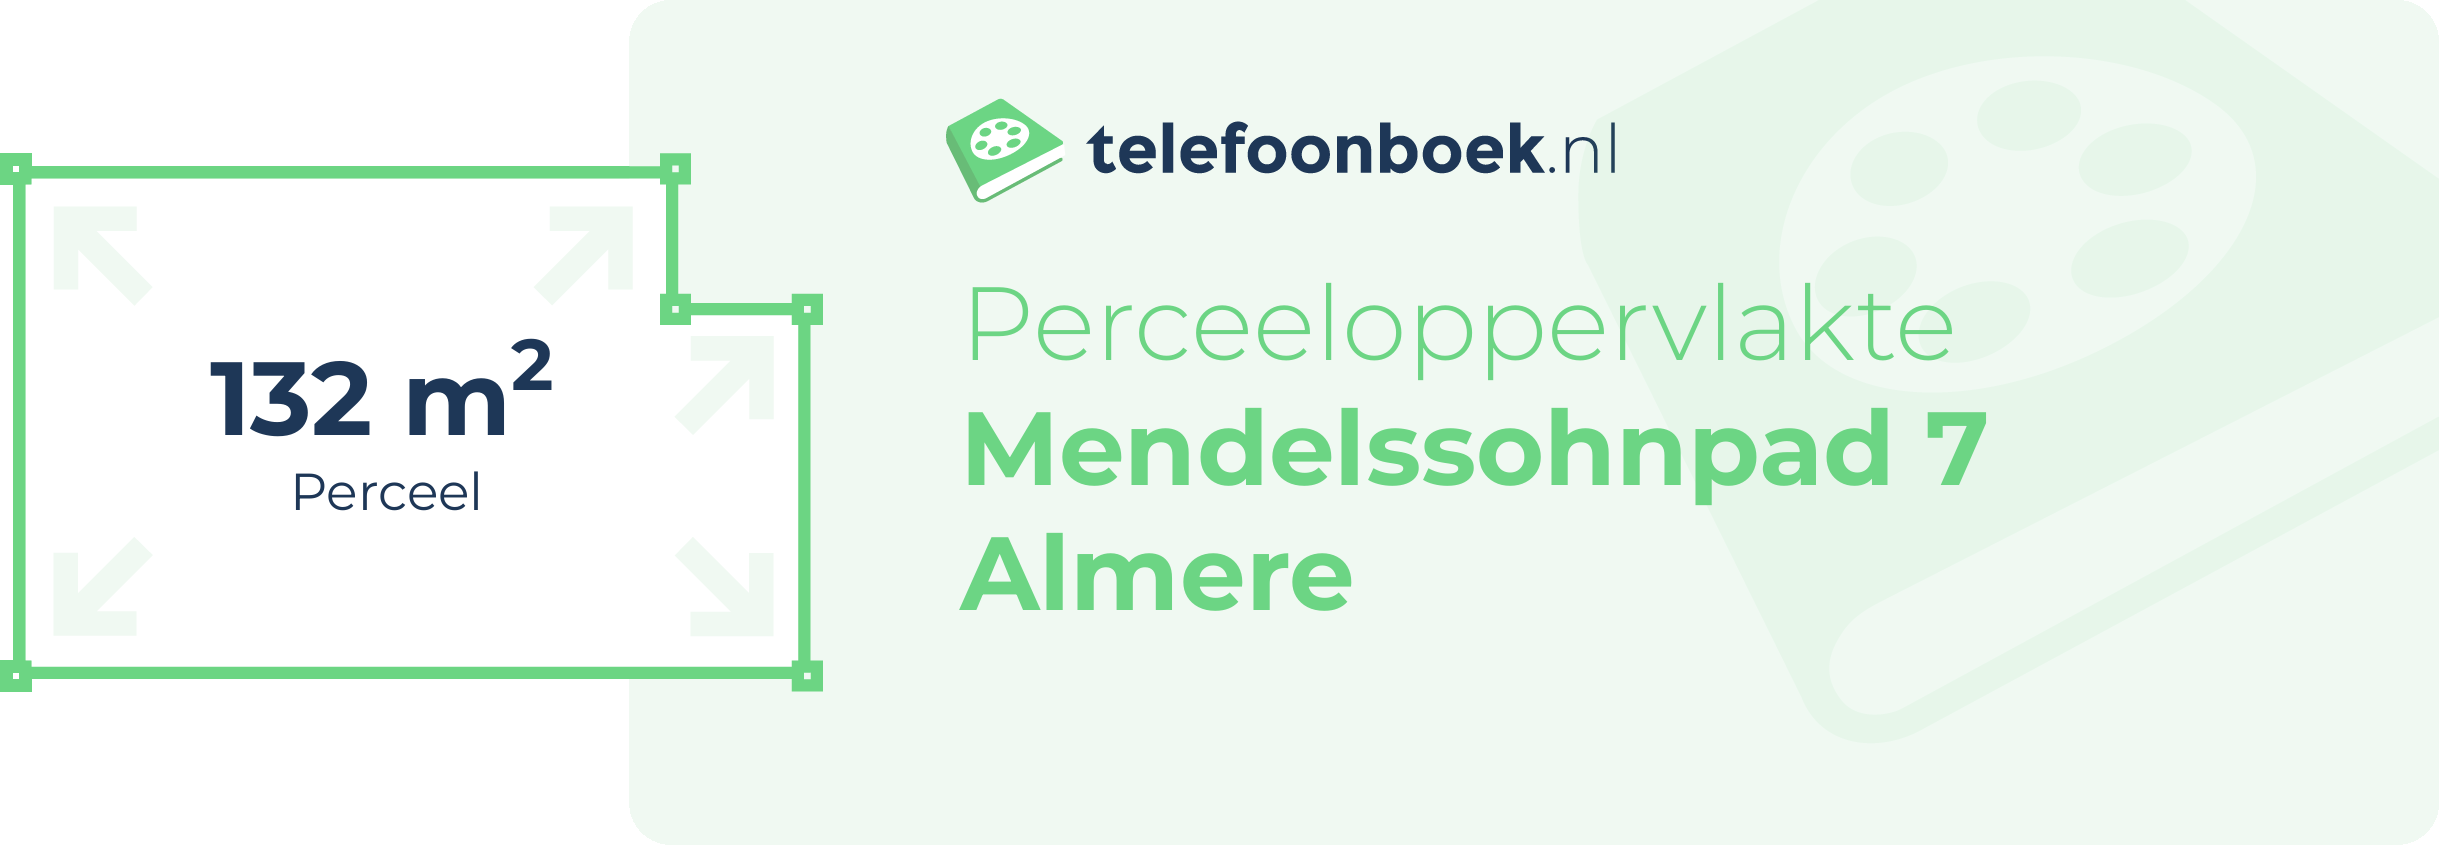 Perceeloppervlakte Mendelssohnpad 7 Almere